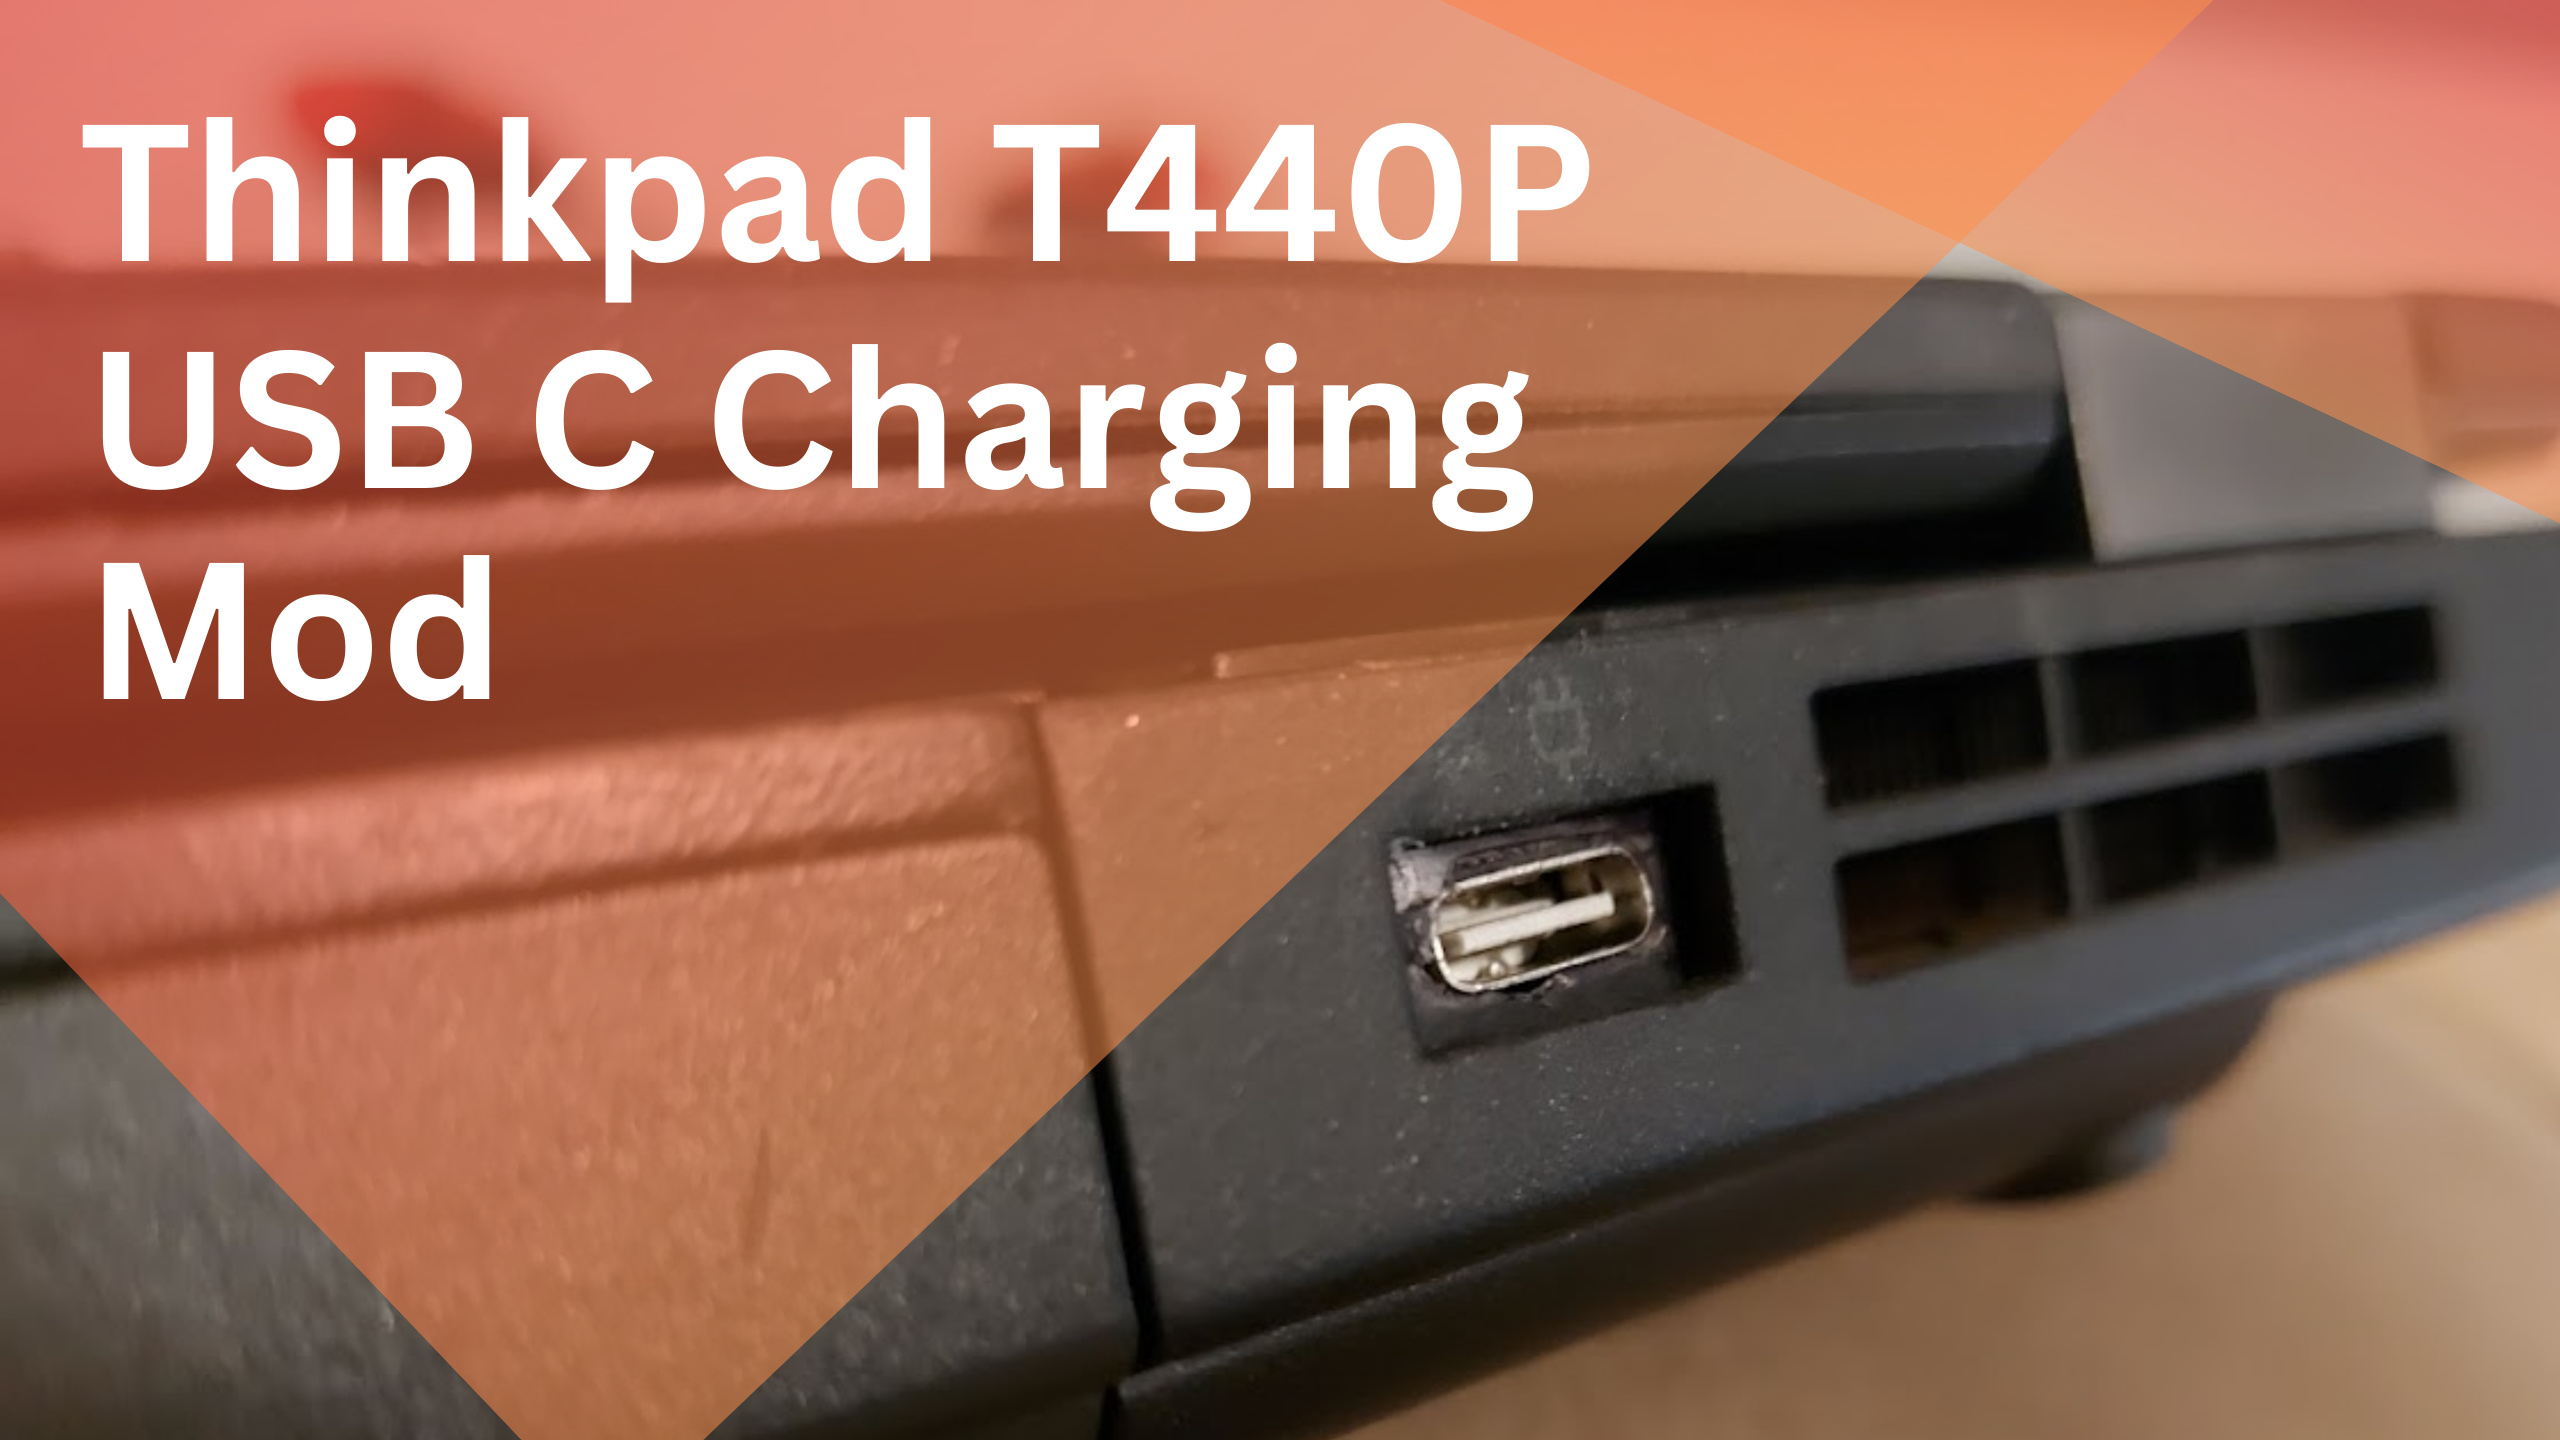 Thinkpad T440p USB C Charging Mod